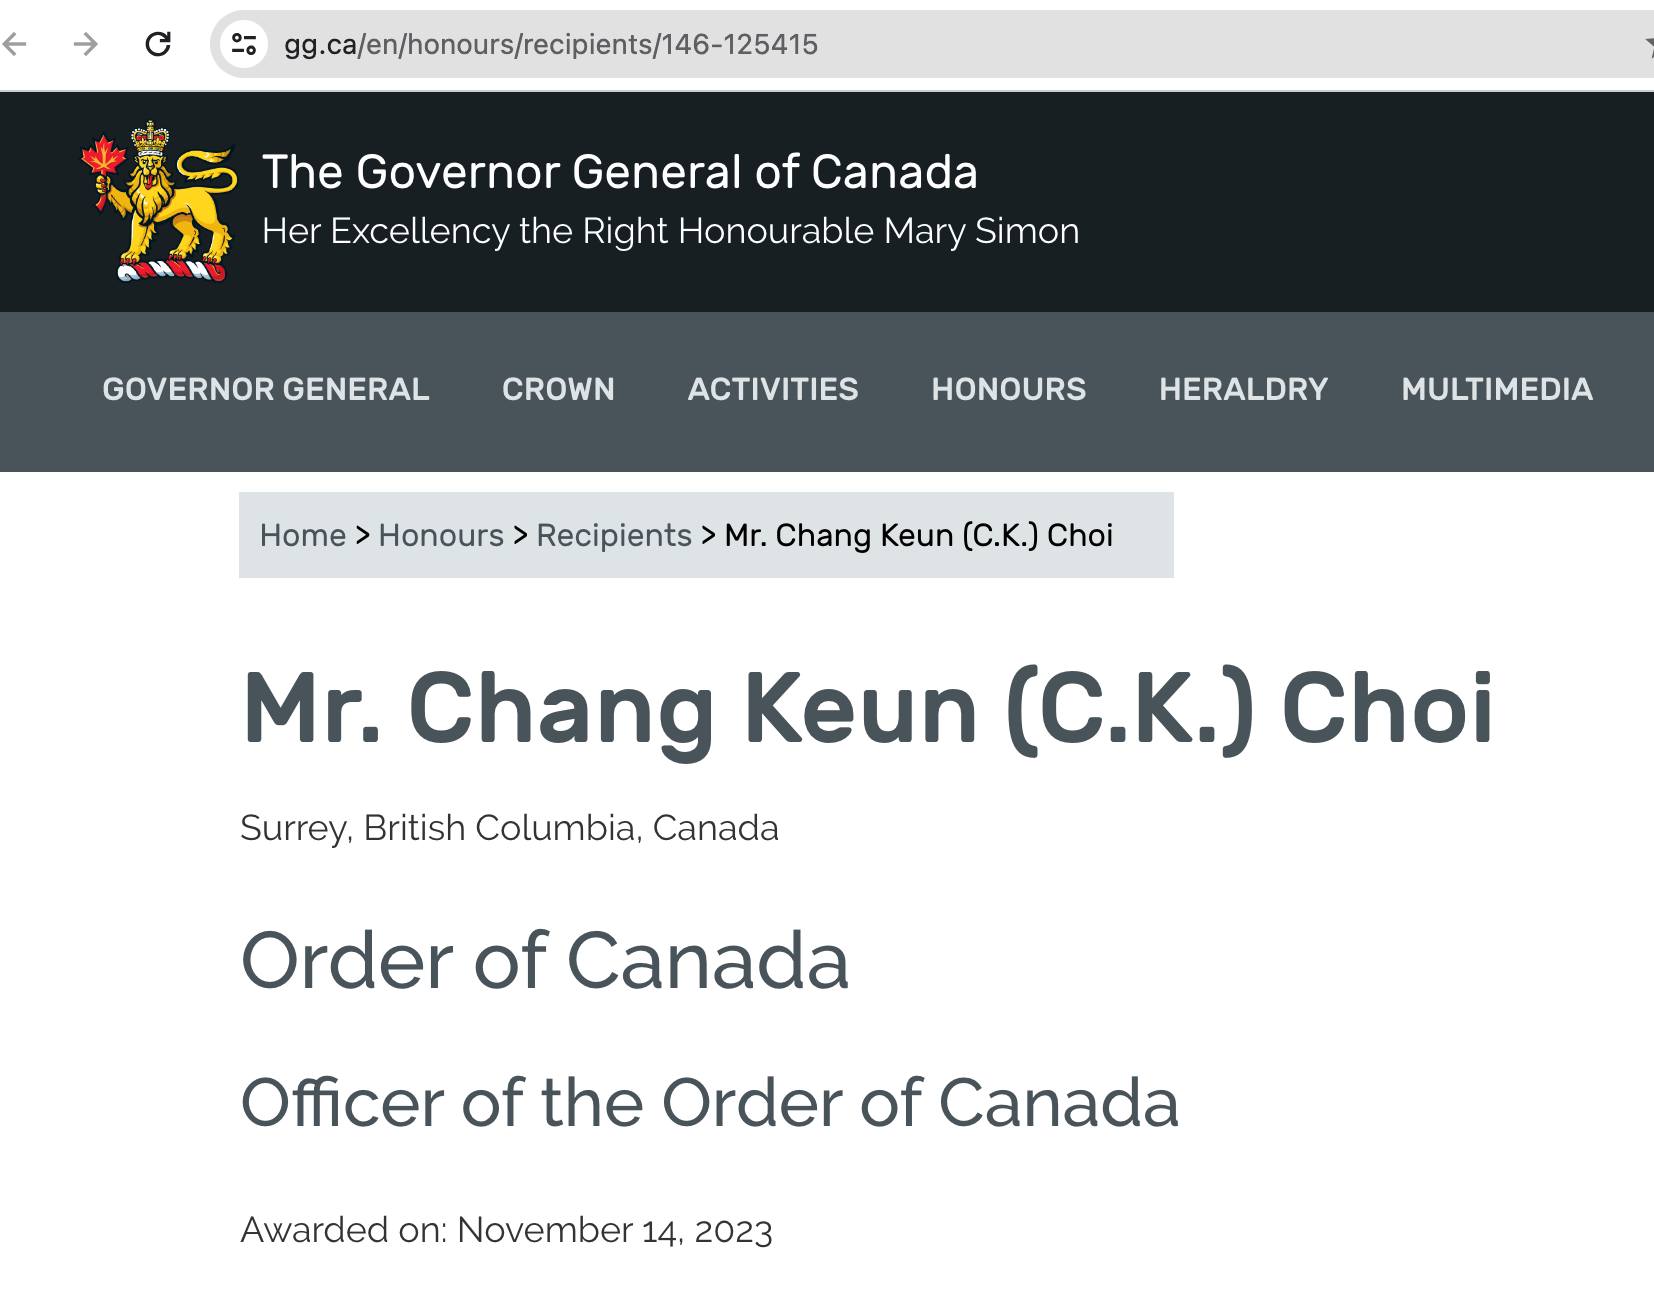 Order of Canada Award 2023